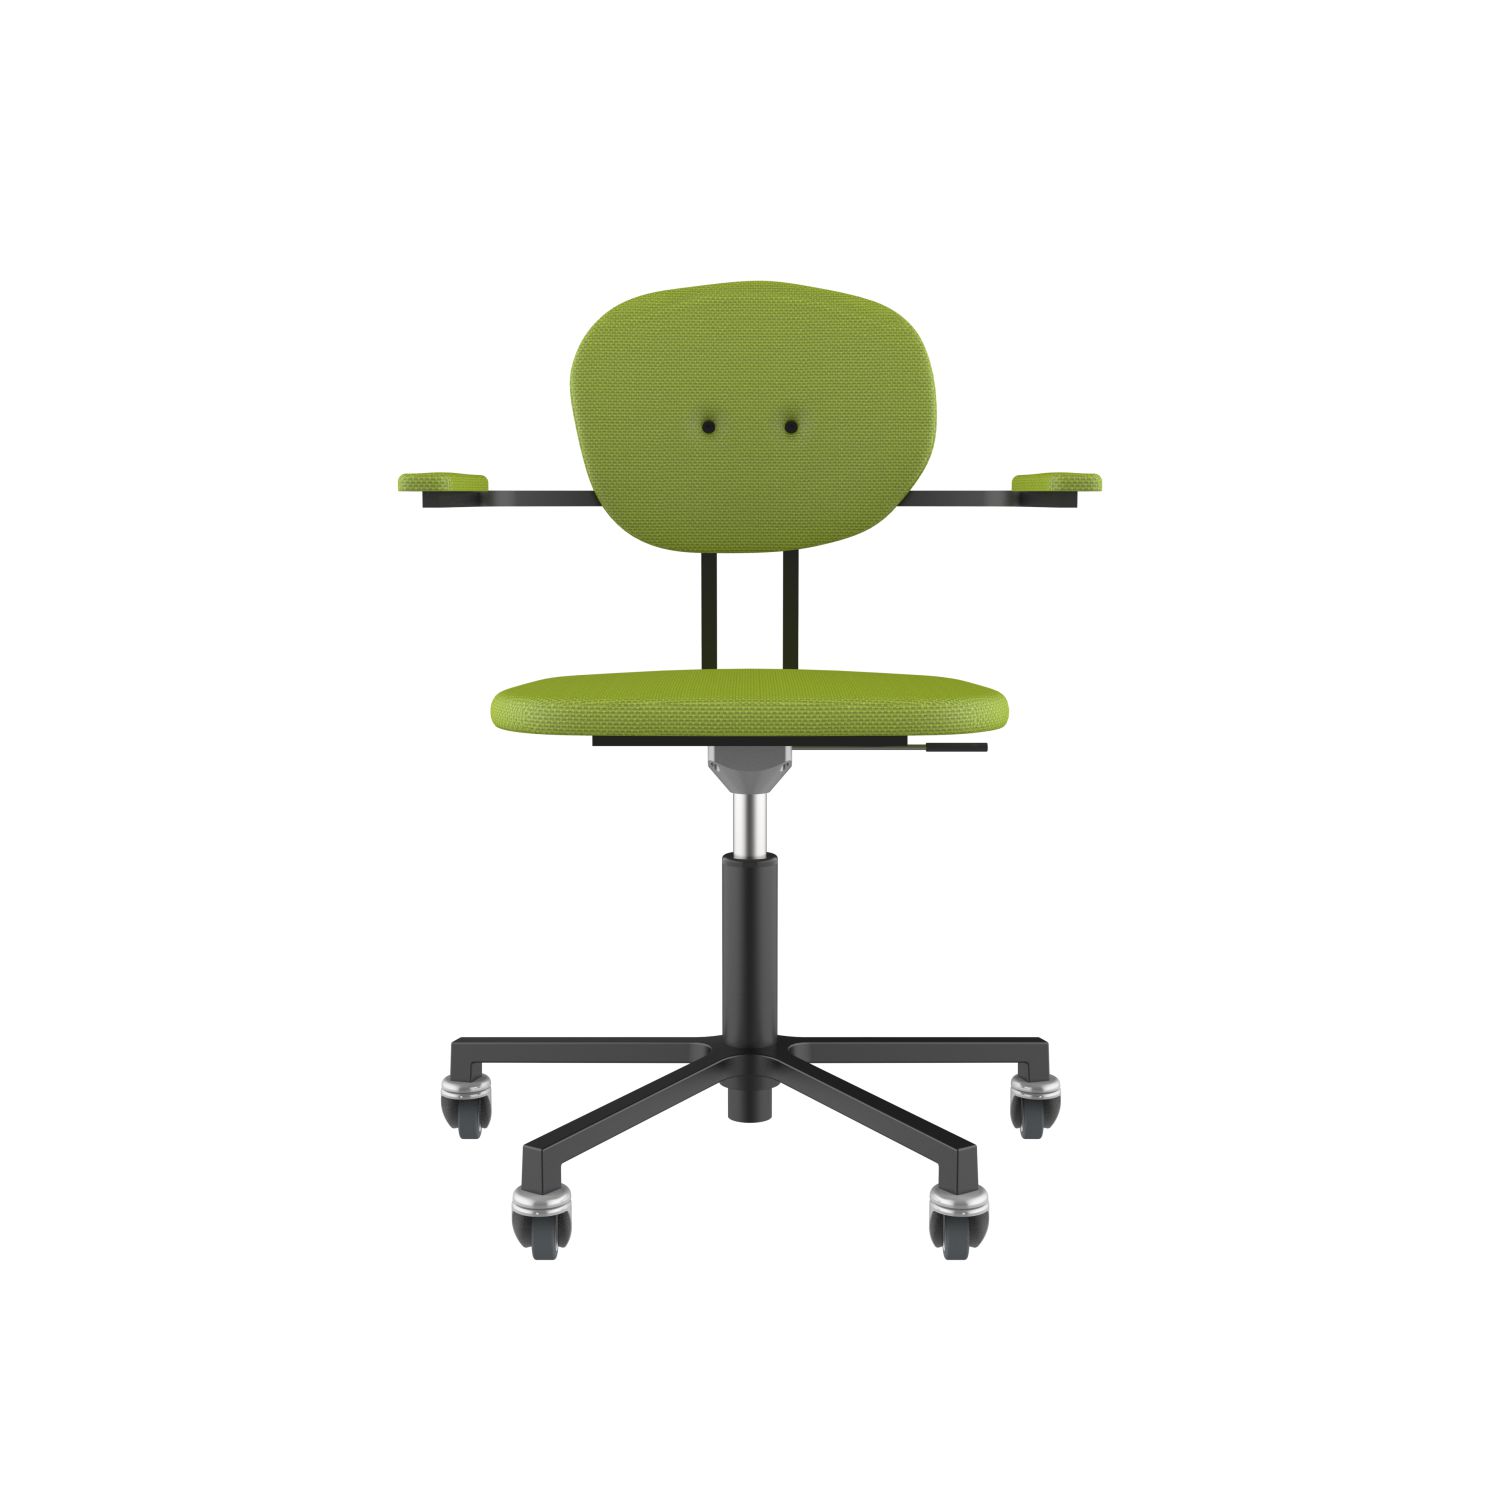 lensvelt maarten baas office chair with armrests backrest a fairway green 020 black ral9005 soft wheels